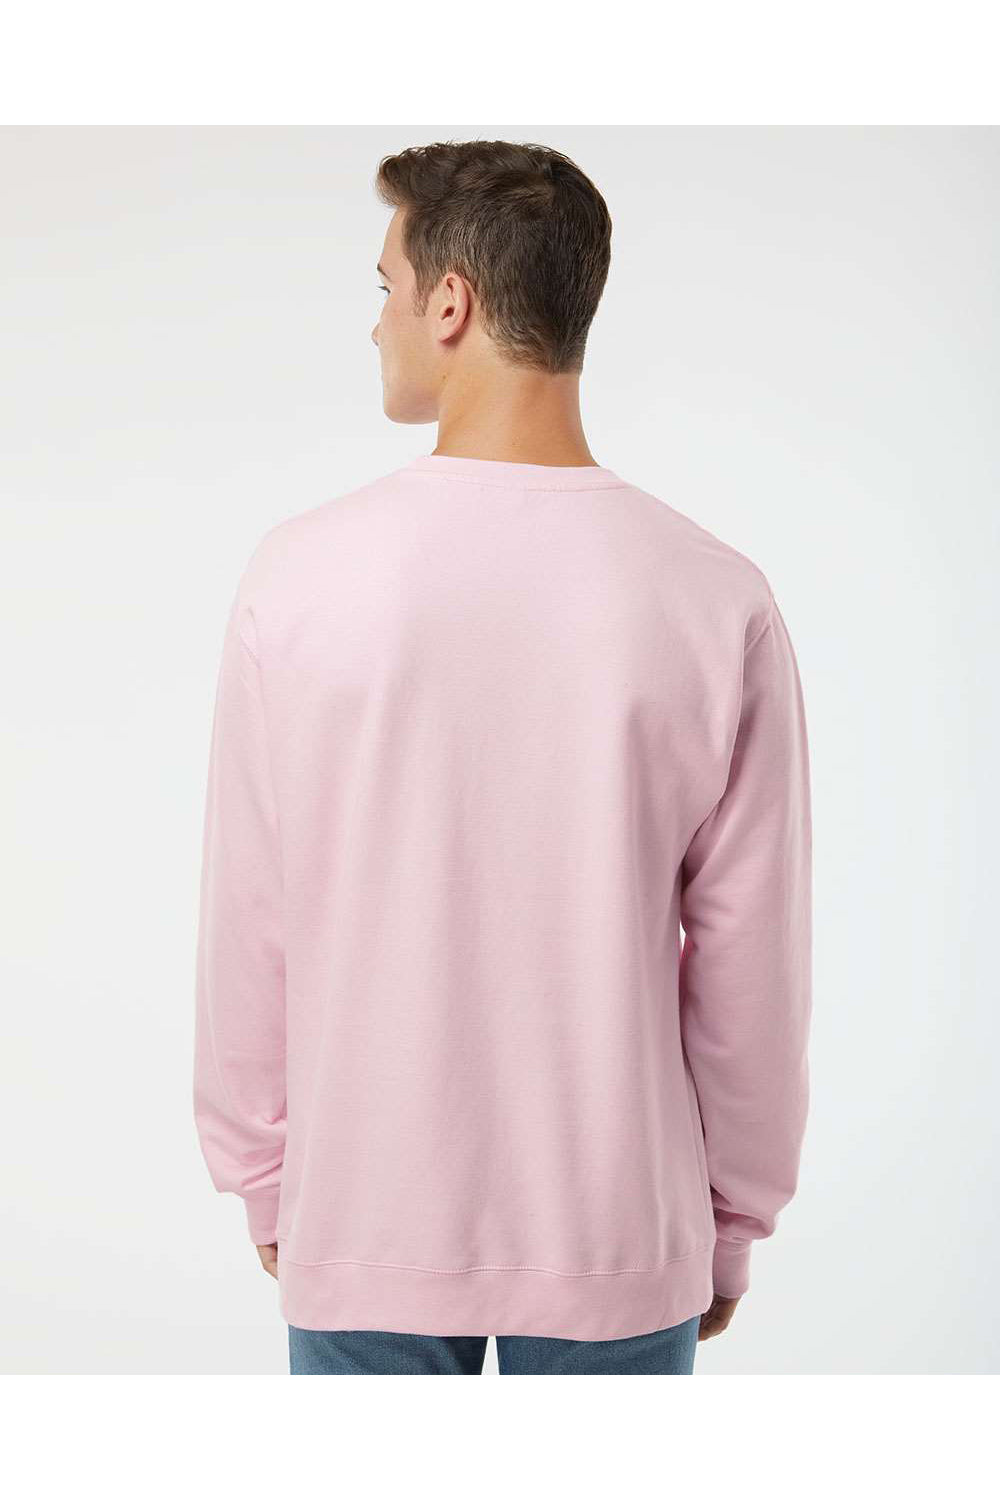 Independent Trading Co. SS3000 Mens Crewneck Sweatshirt Light Pink Model Back